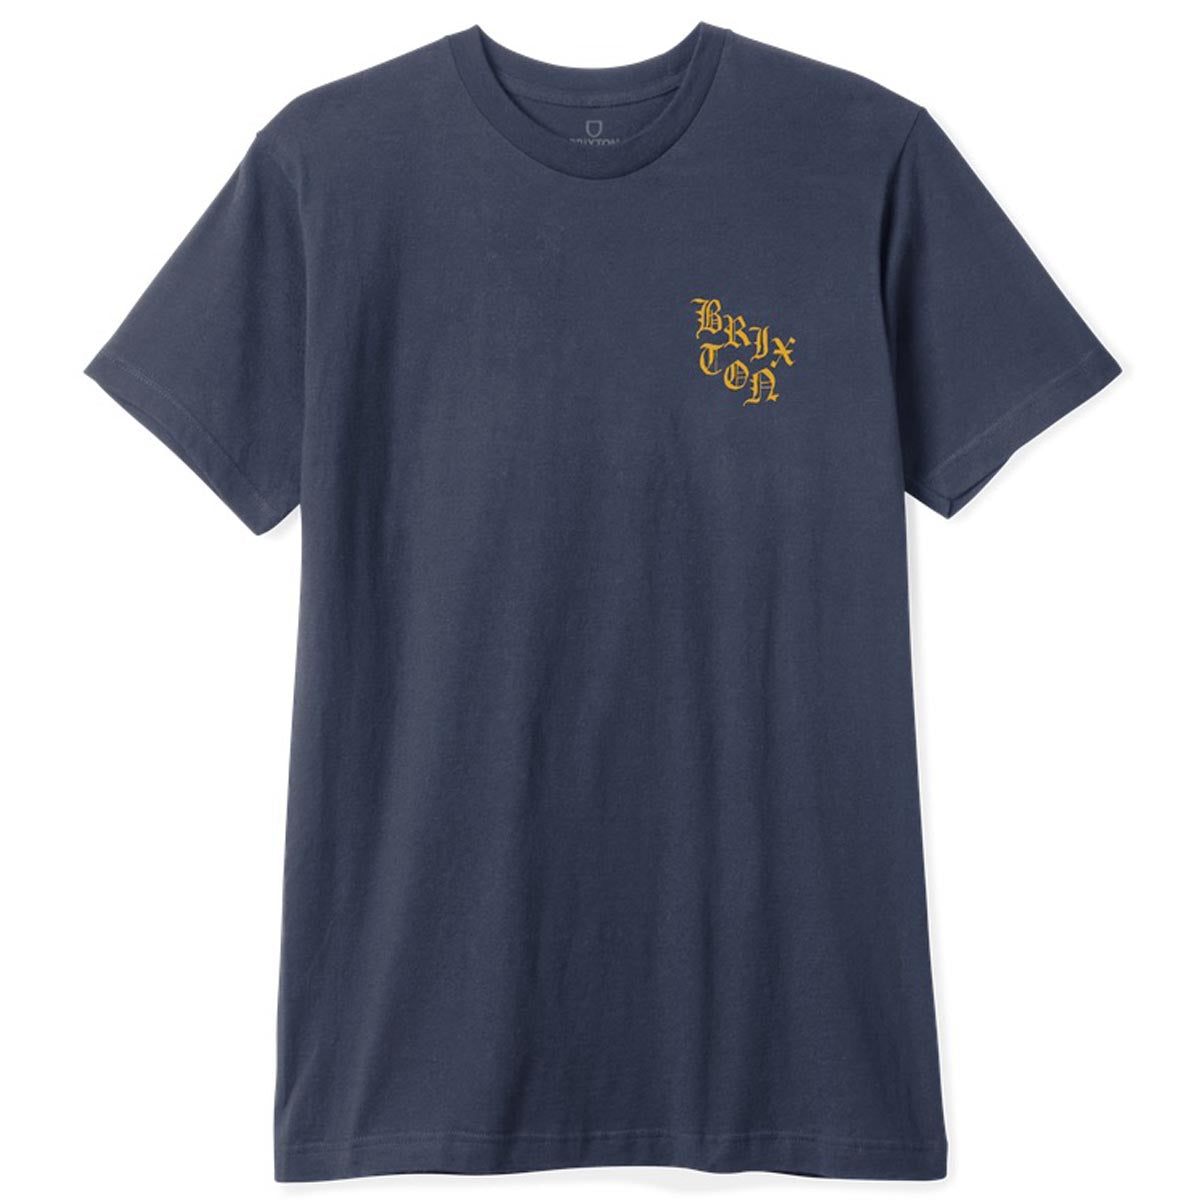 Brixton Be Kind T-Shirt - Washed Navy image 2